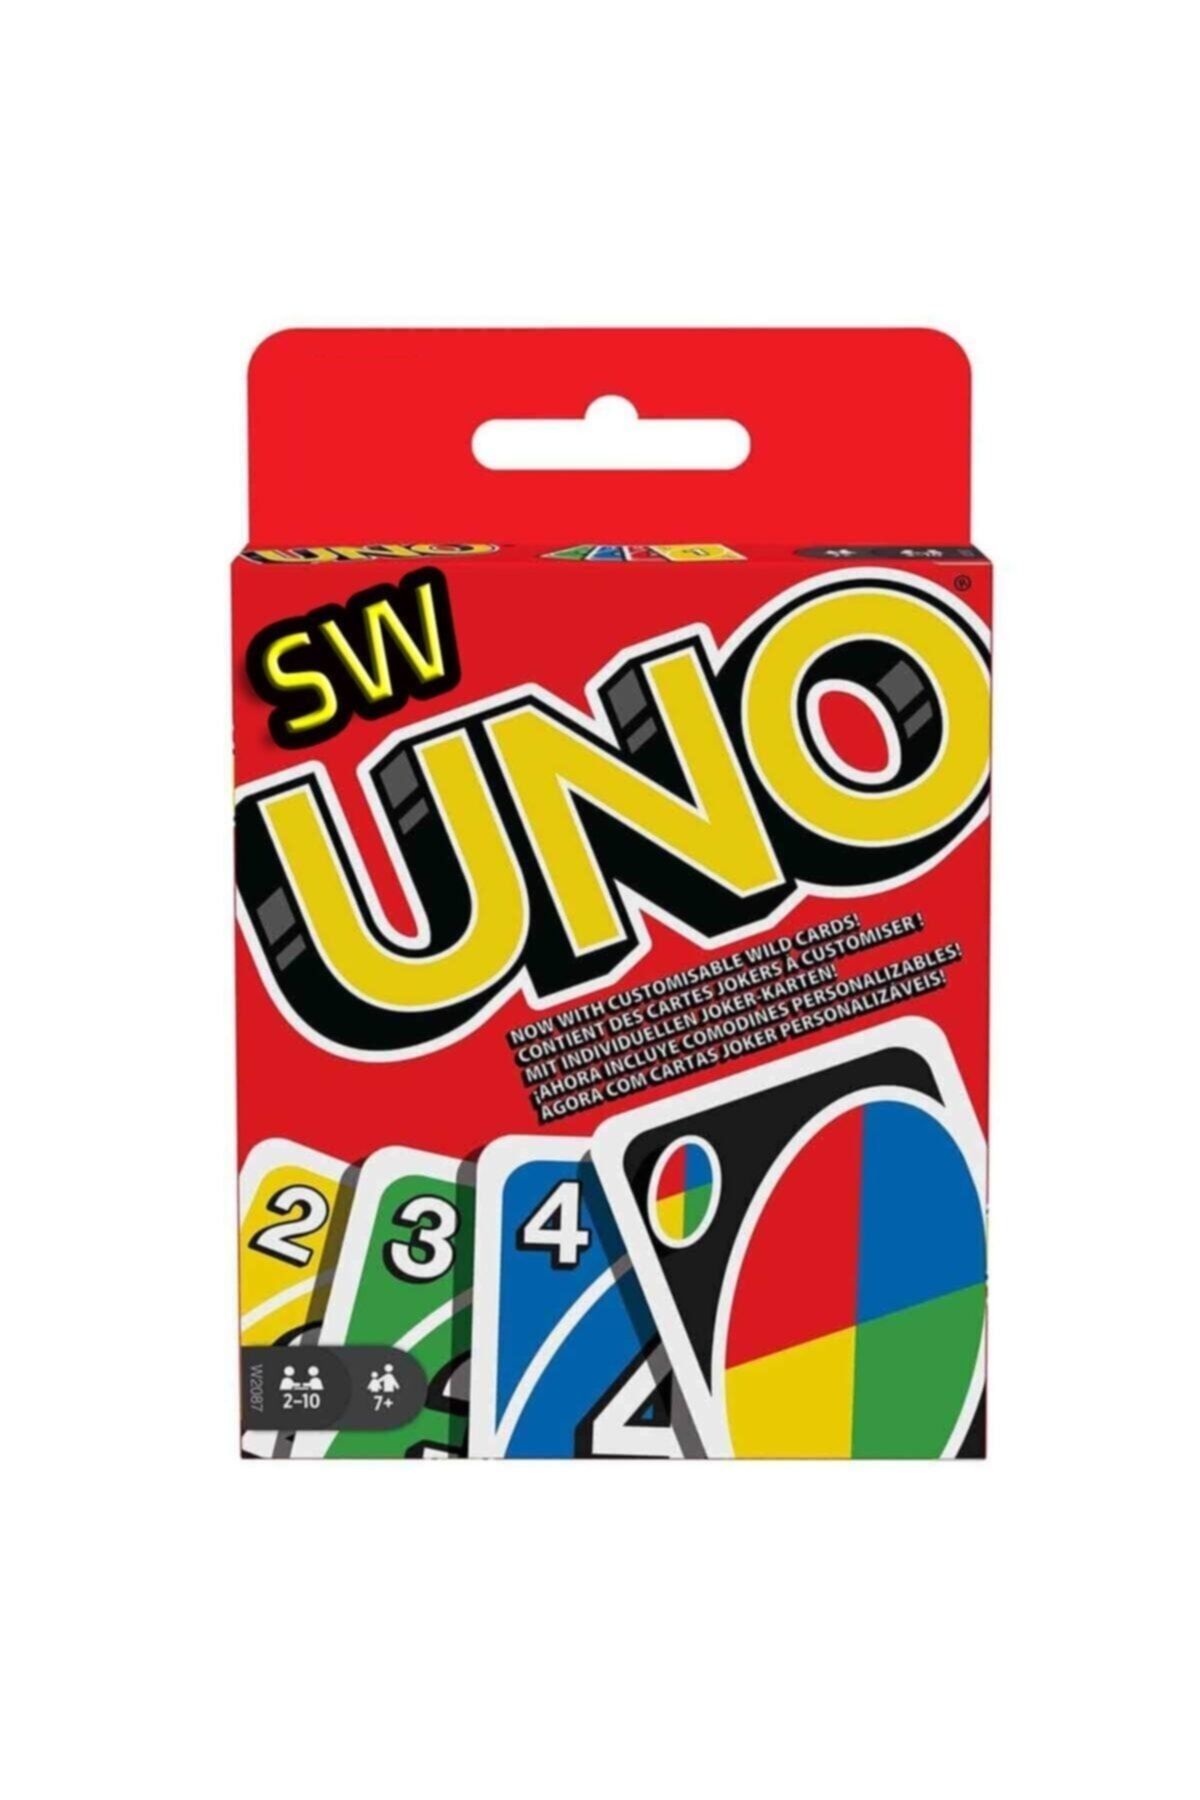 Swallow Uno Çift Deste 112 Kart Uno Oyun Kağıt Aile Oyunu